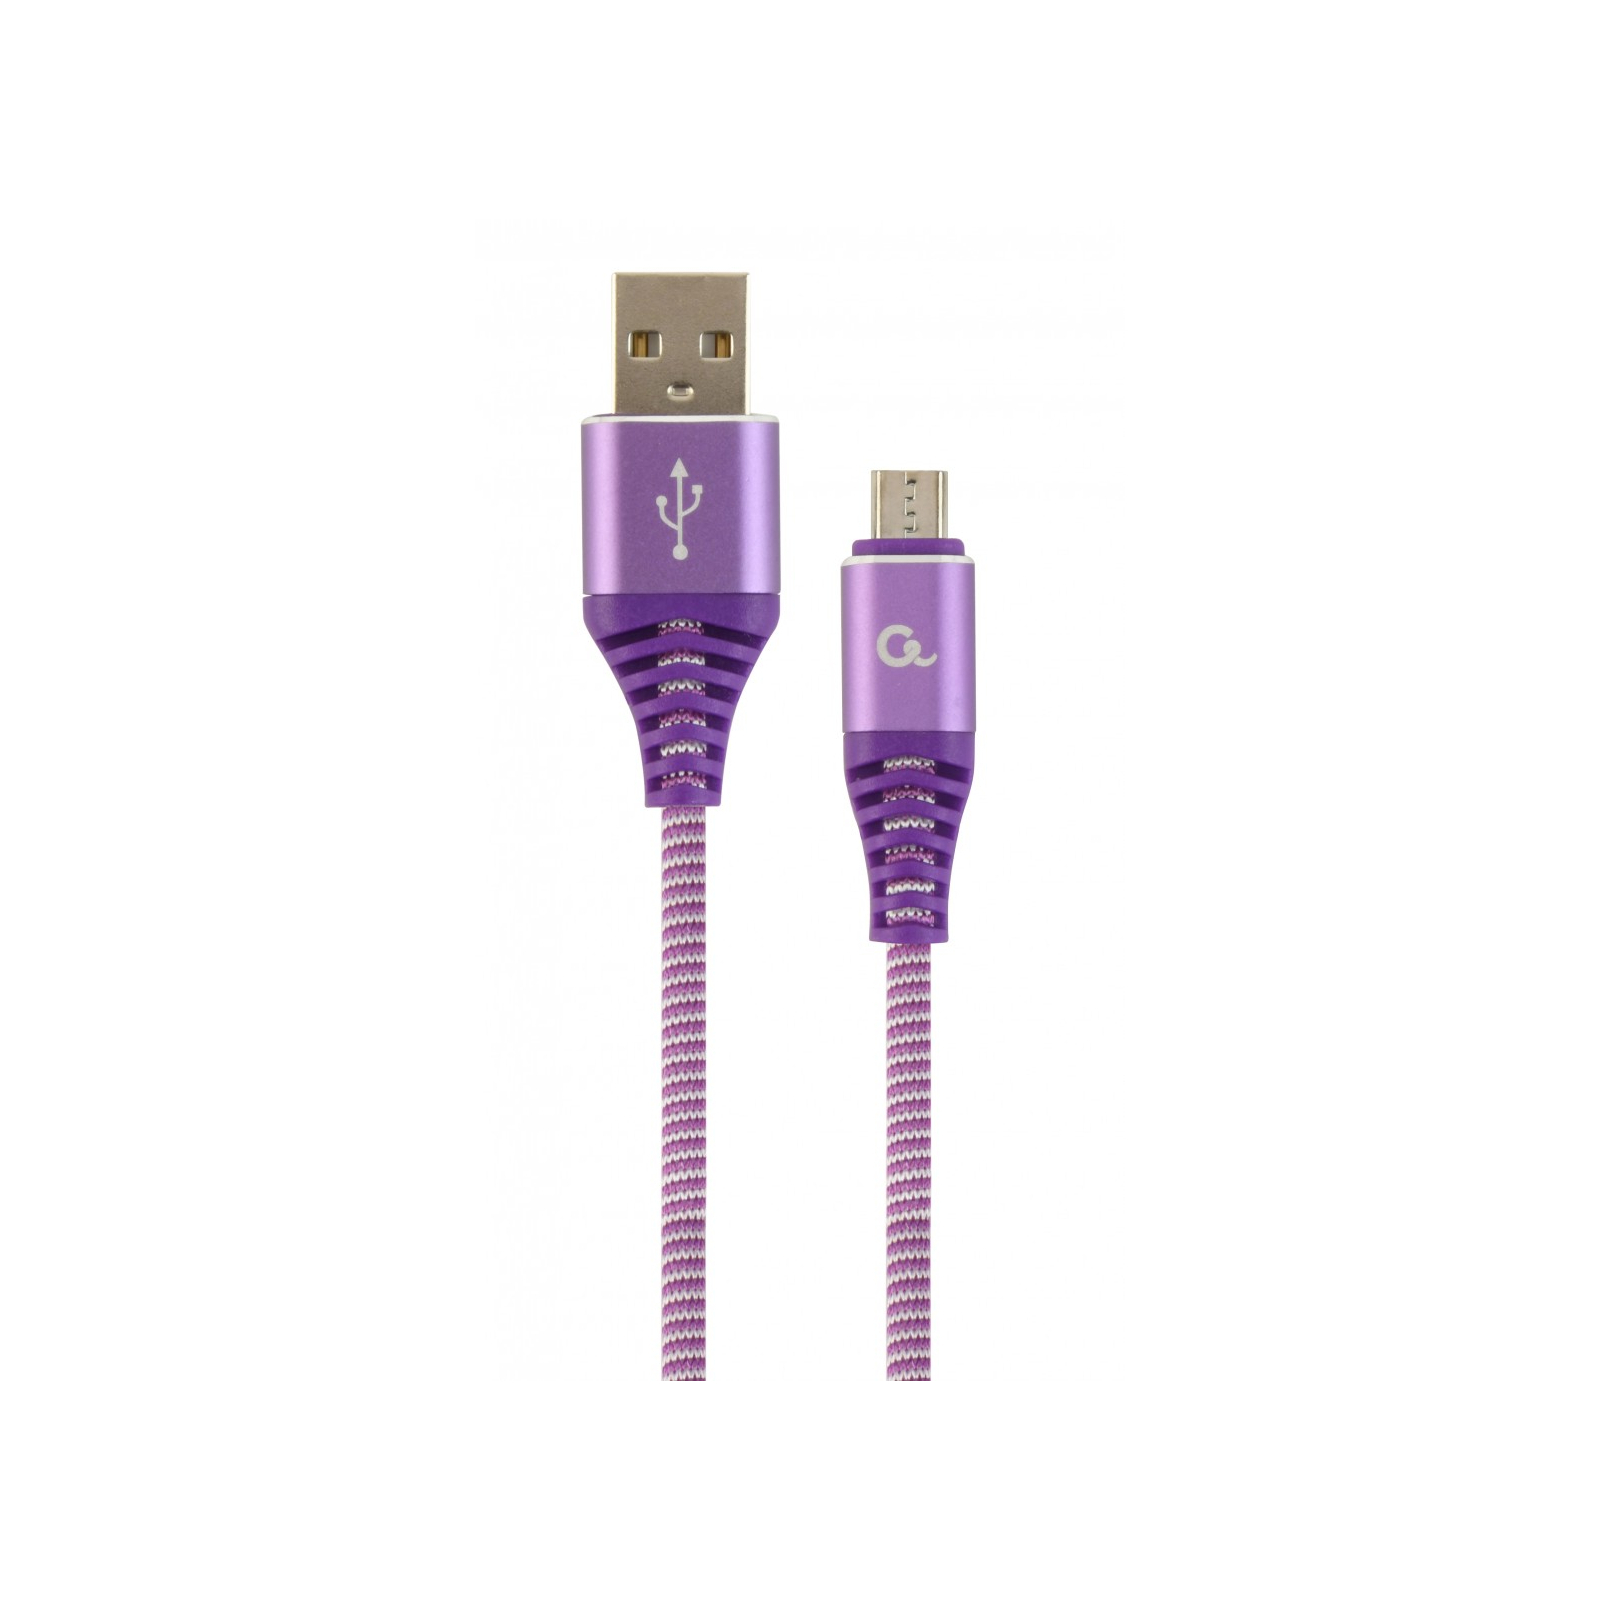 Дата кабель USB 2.0 Micro 5P to AM Cablexpert (CC-USB2B-AMmBM-2M-BW)